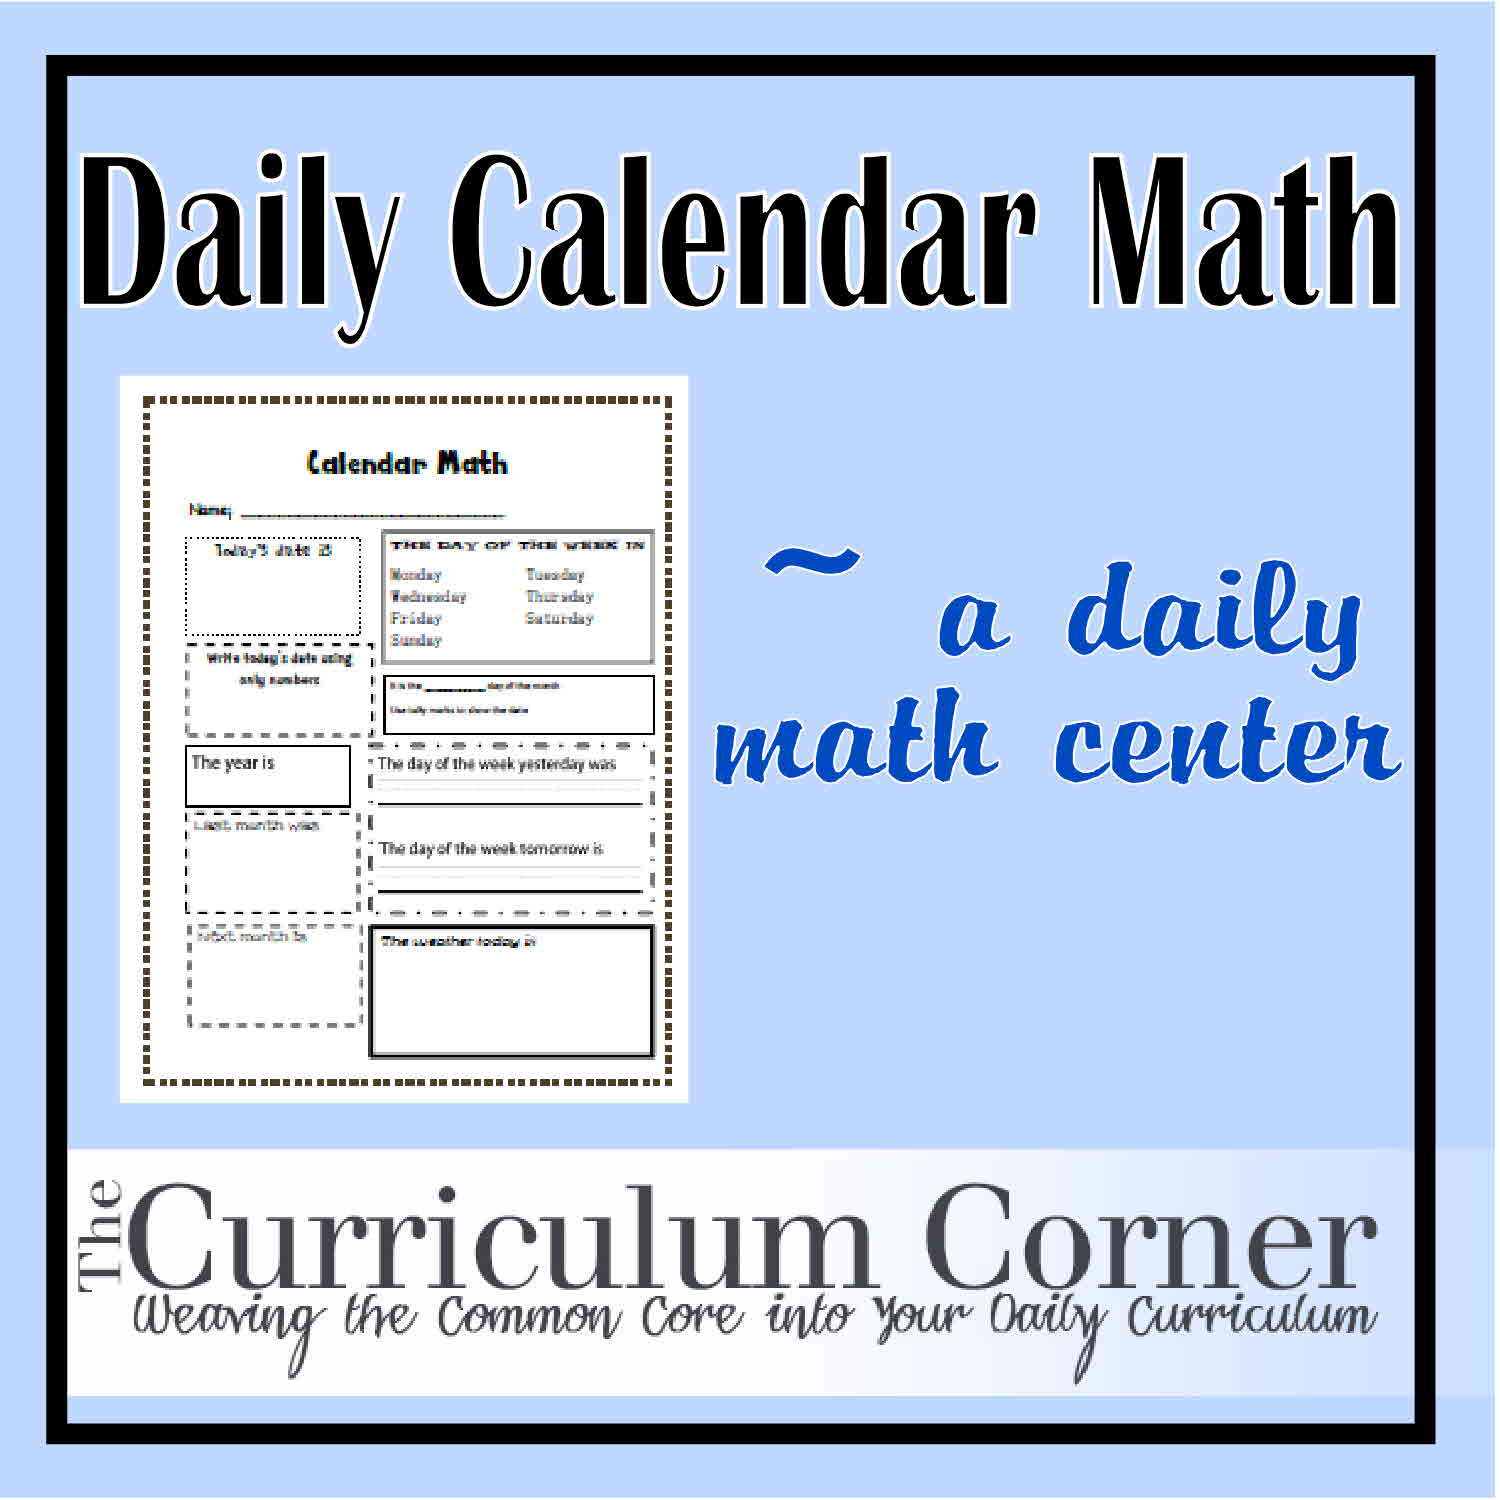 Daily Calendar Math Activity